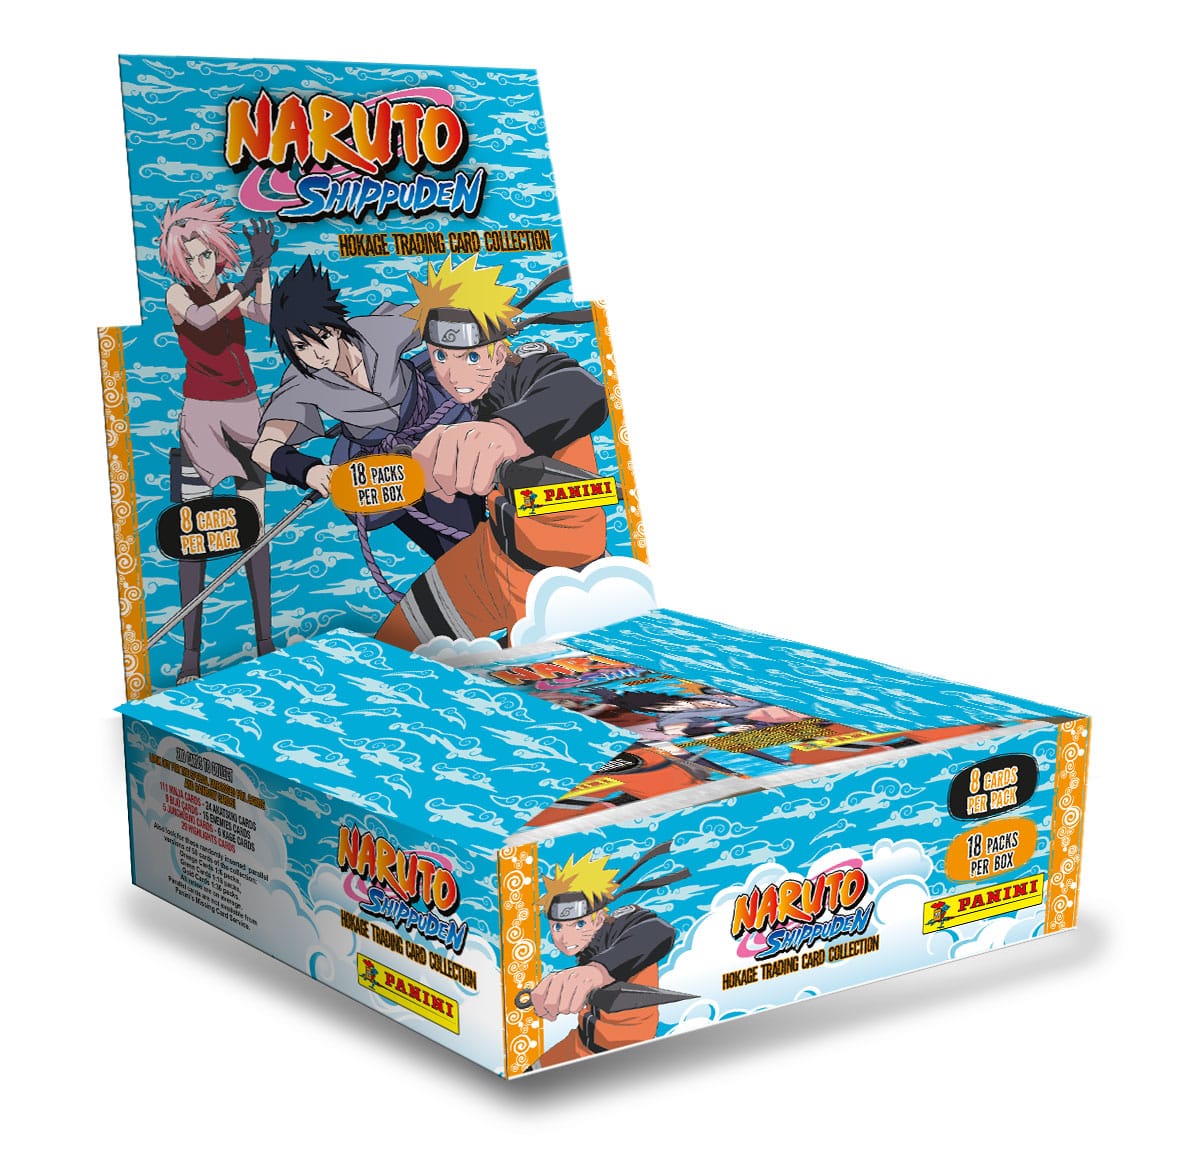 Naruto Shippuden Hokage Trading Card Collection Flow Packs Display (18)